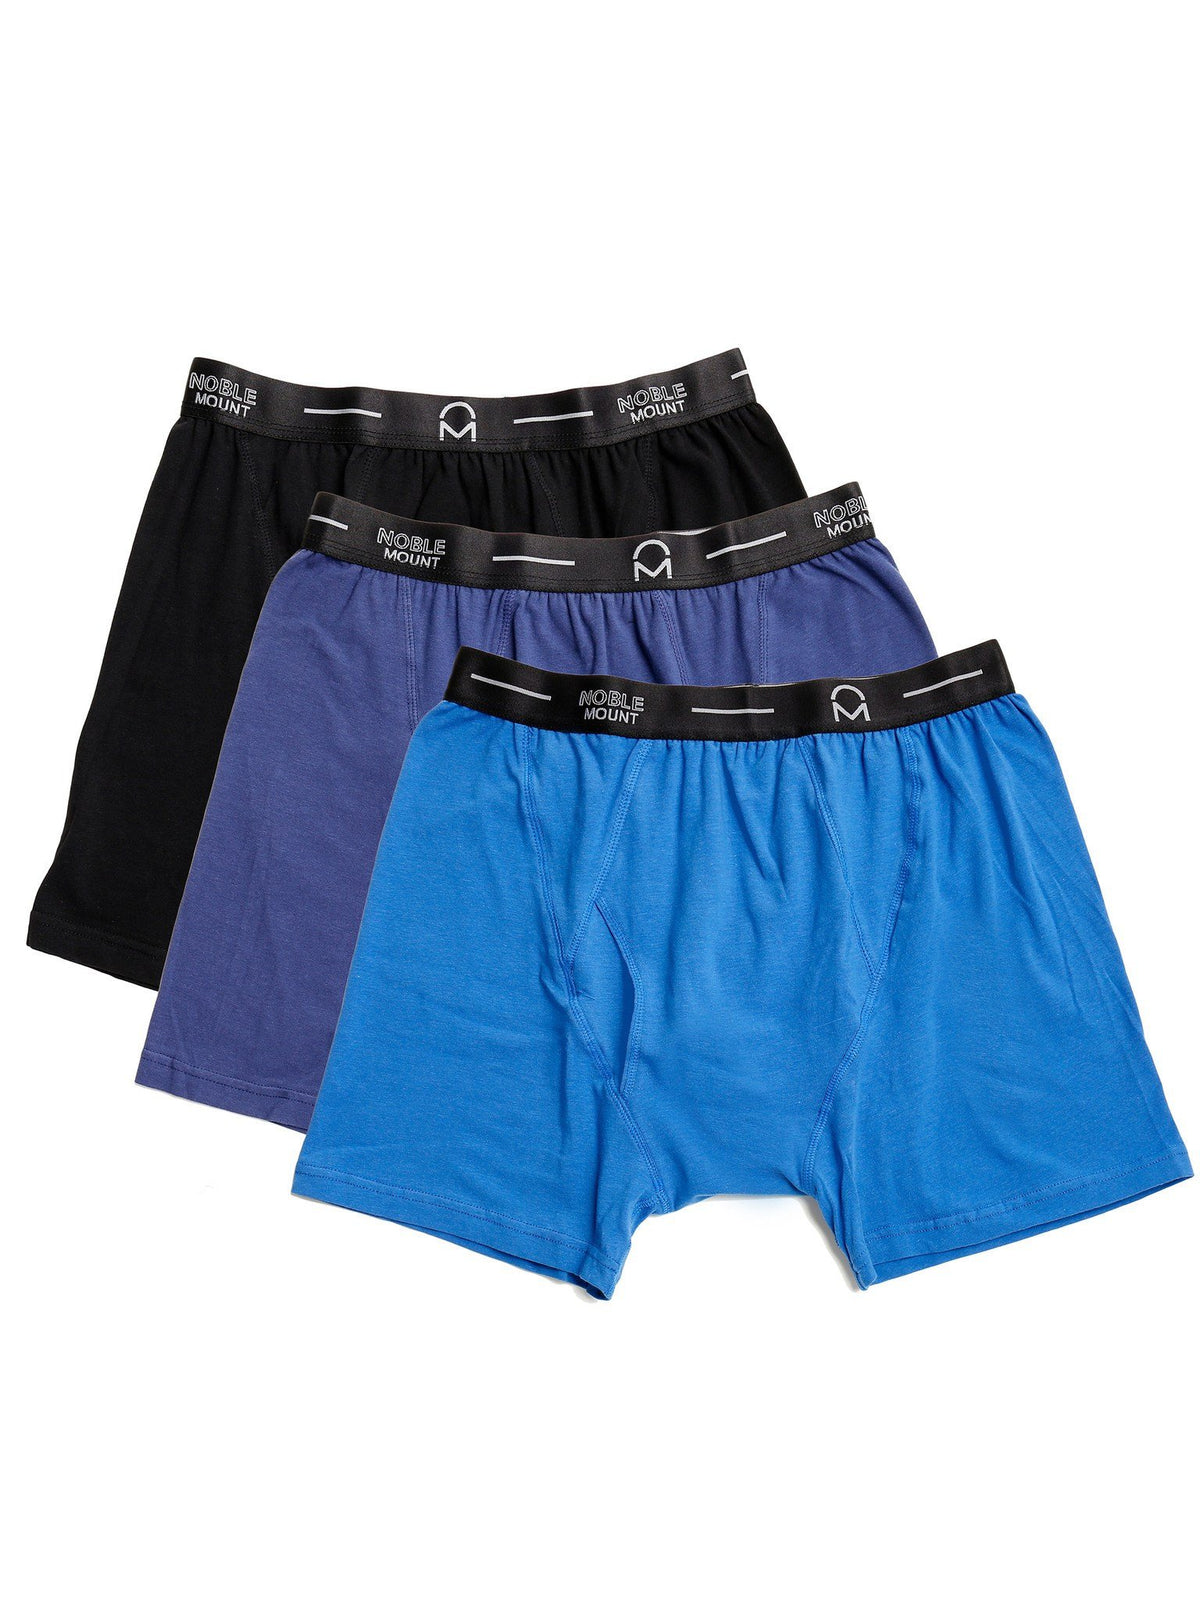 Men's Stretch Cotton Knit Boxer Briefs 3-Pack - Set 2 - Black/Blue/Dark Blue